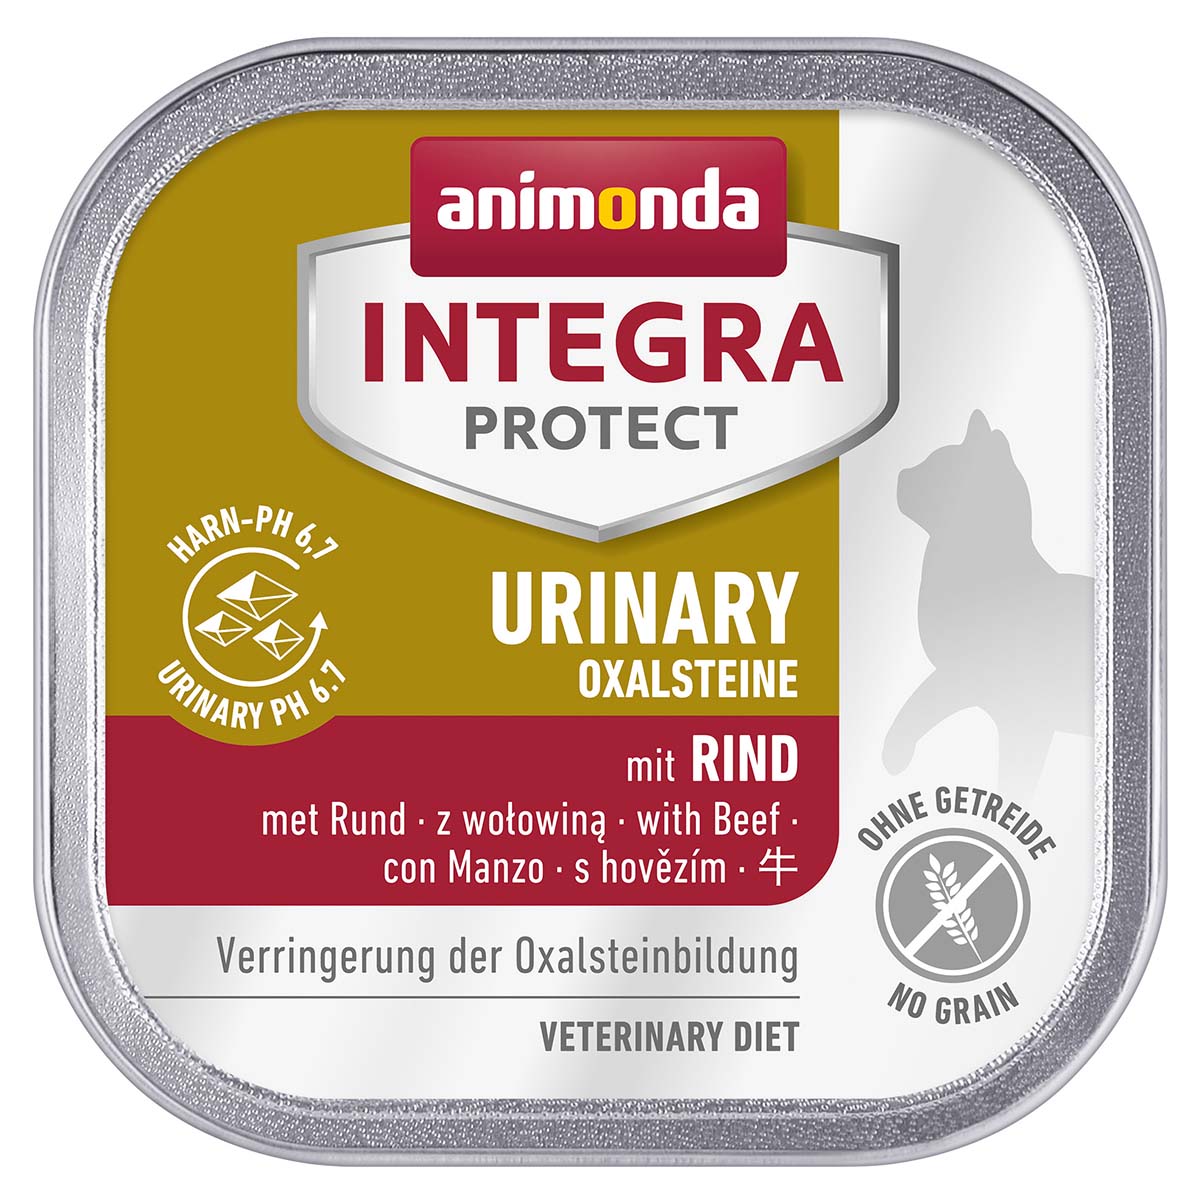 animonda INTEGRA PROTECT Adult Urinary Oxalstein mit Rind 6x100g von animonda Integra Protect